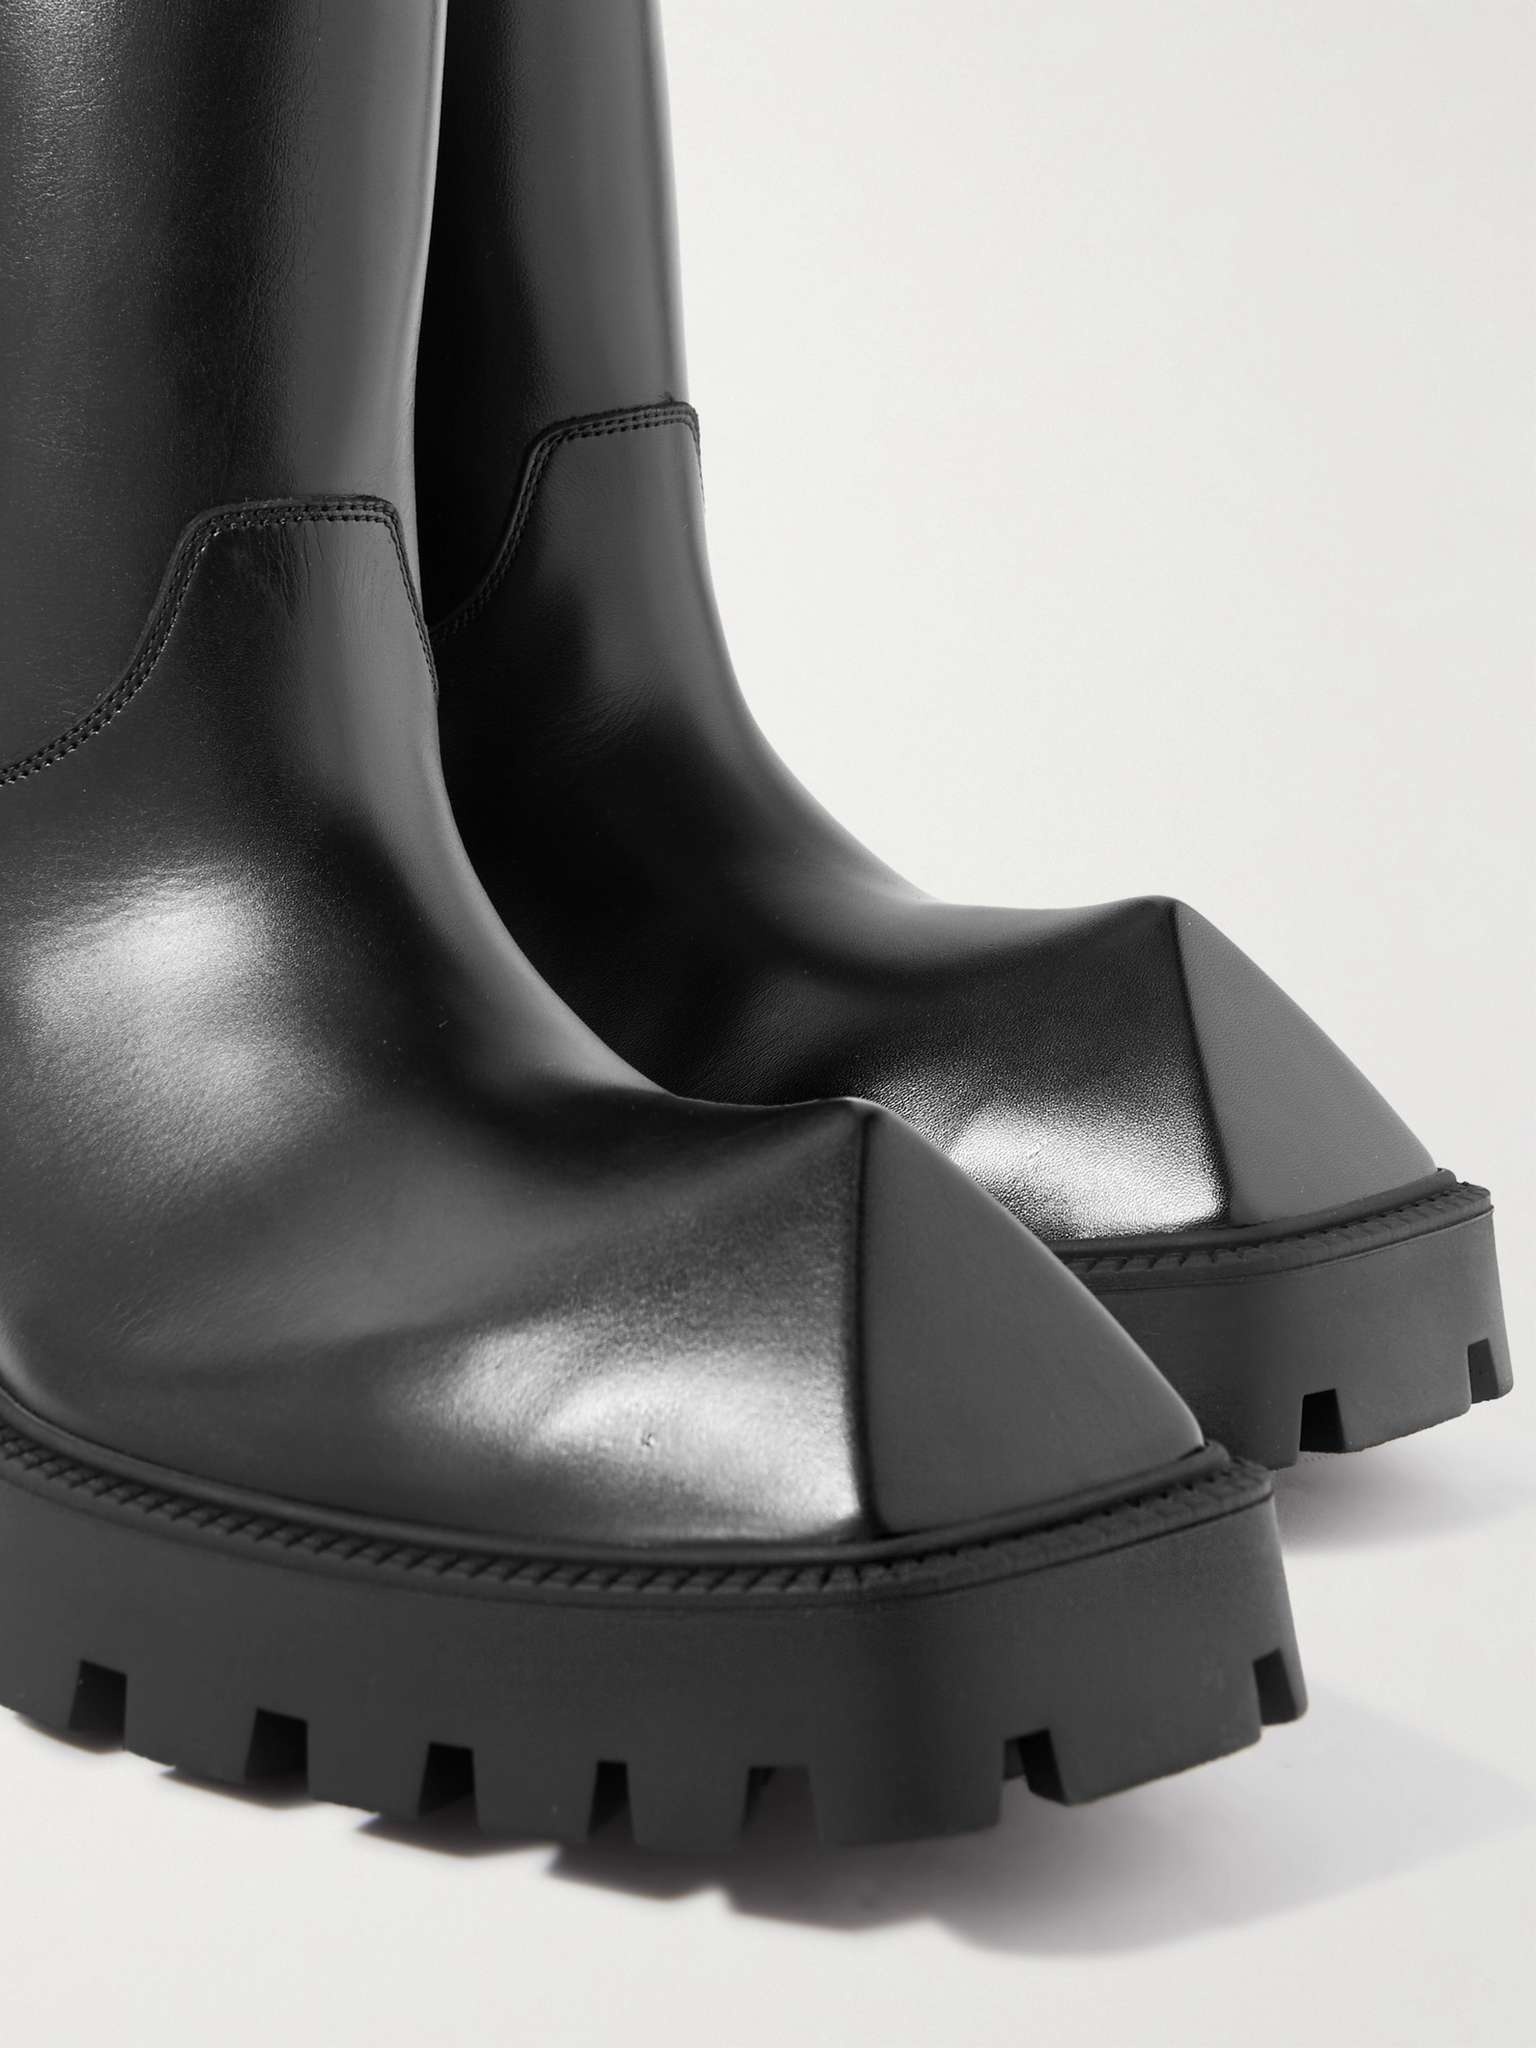 Rhino Leather Boots - 5